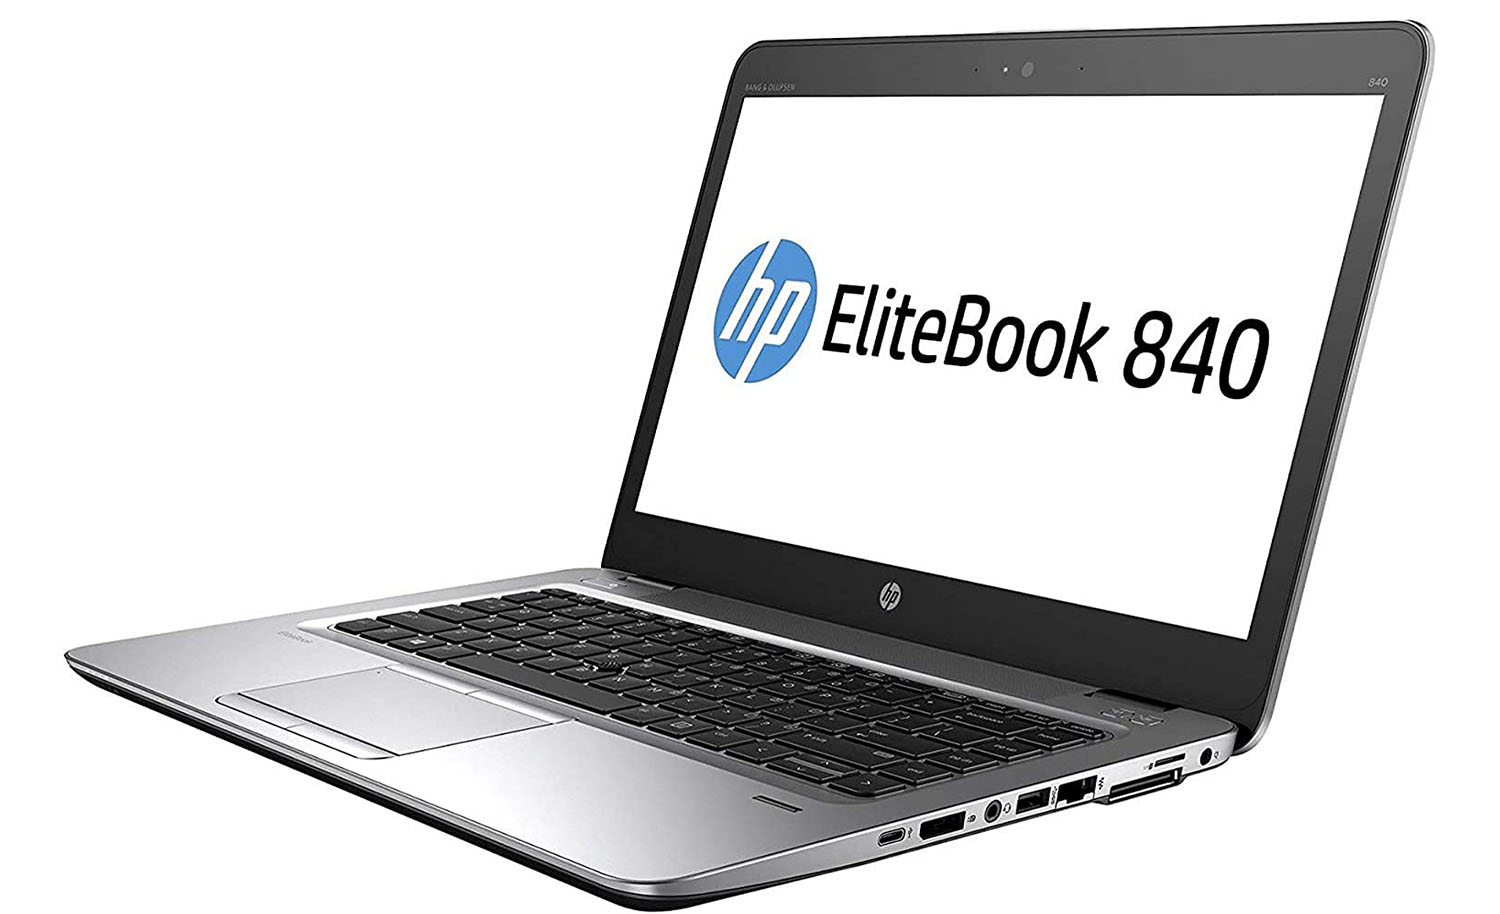 HP Elitebook 840 G2 Intel Core i7 5th Gen 8GB RAM 512GB SSD Windows 10 Pro